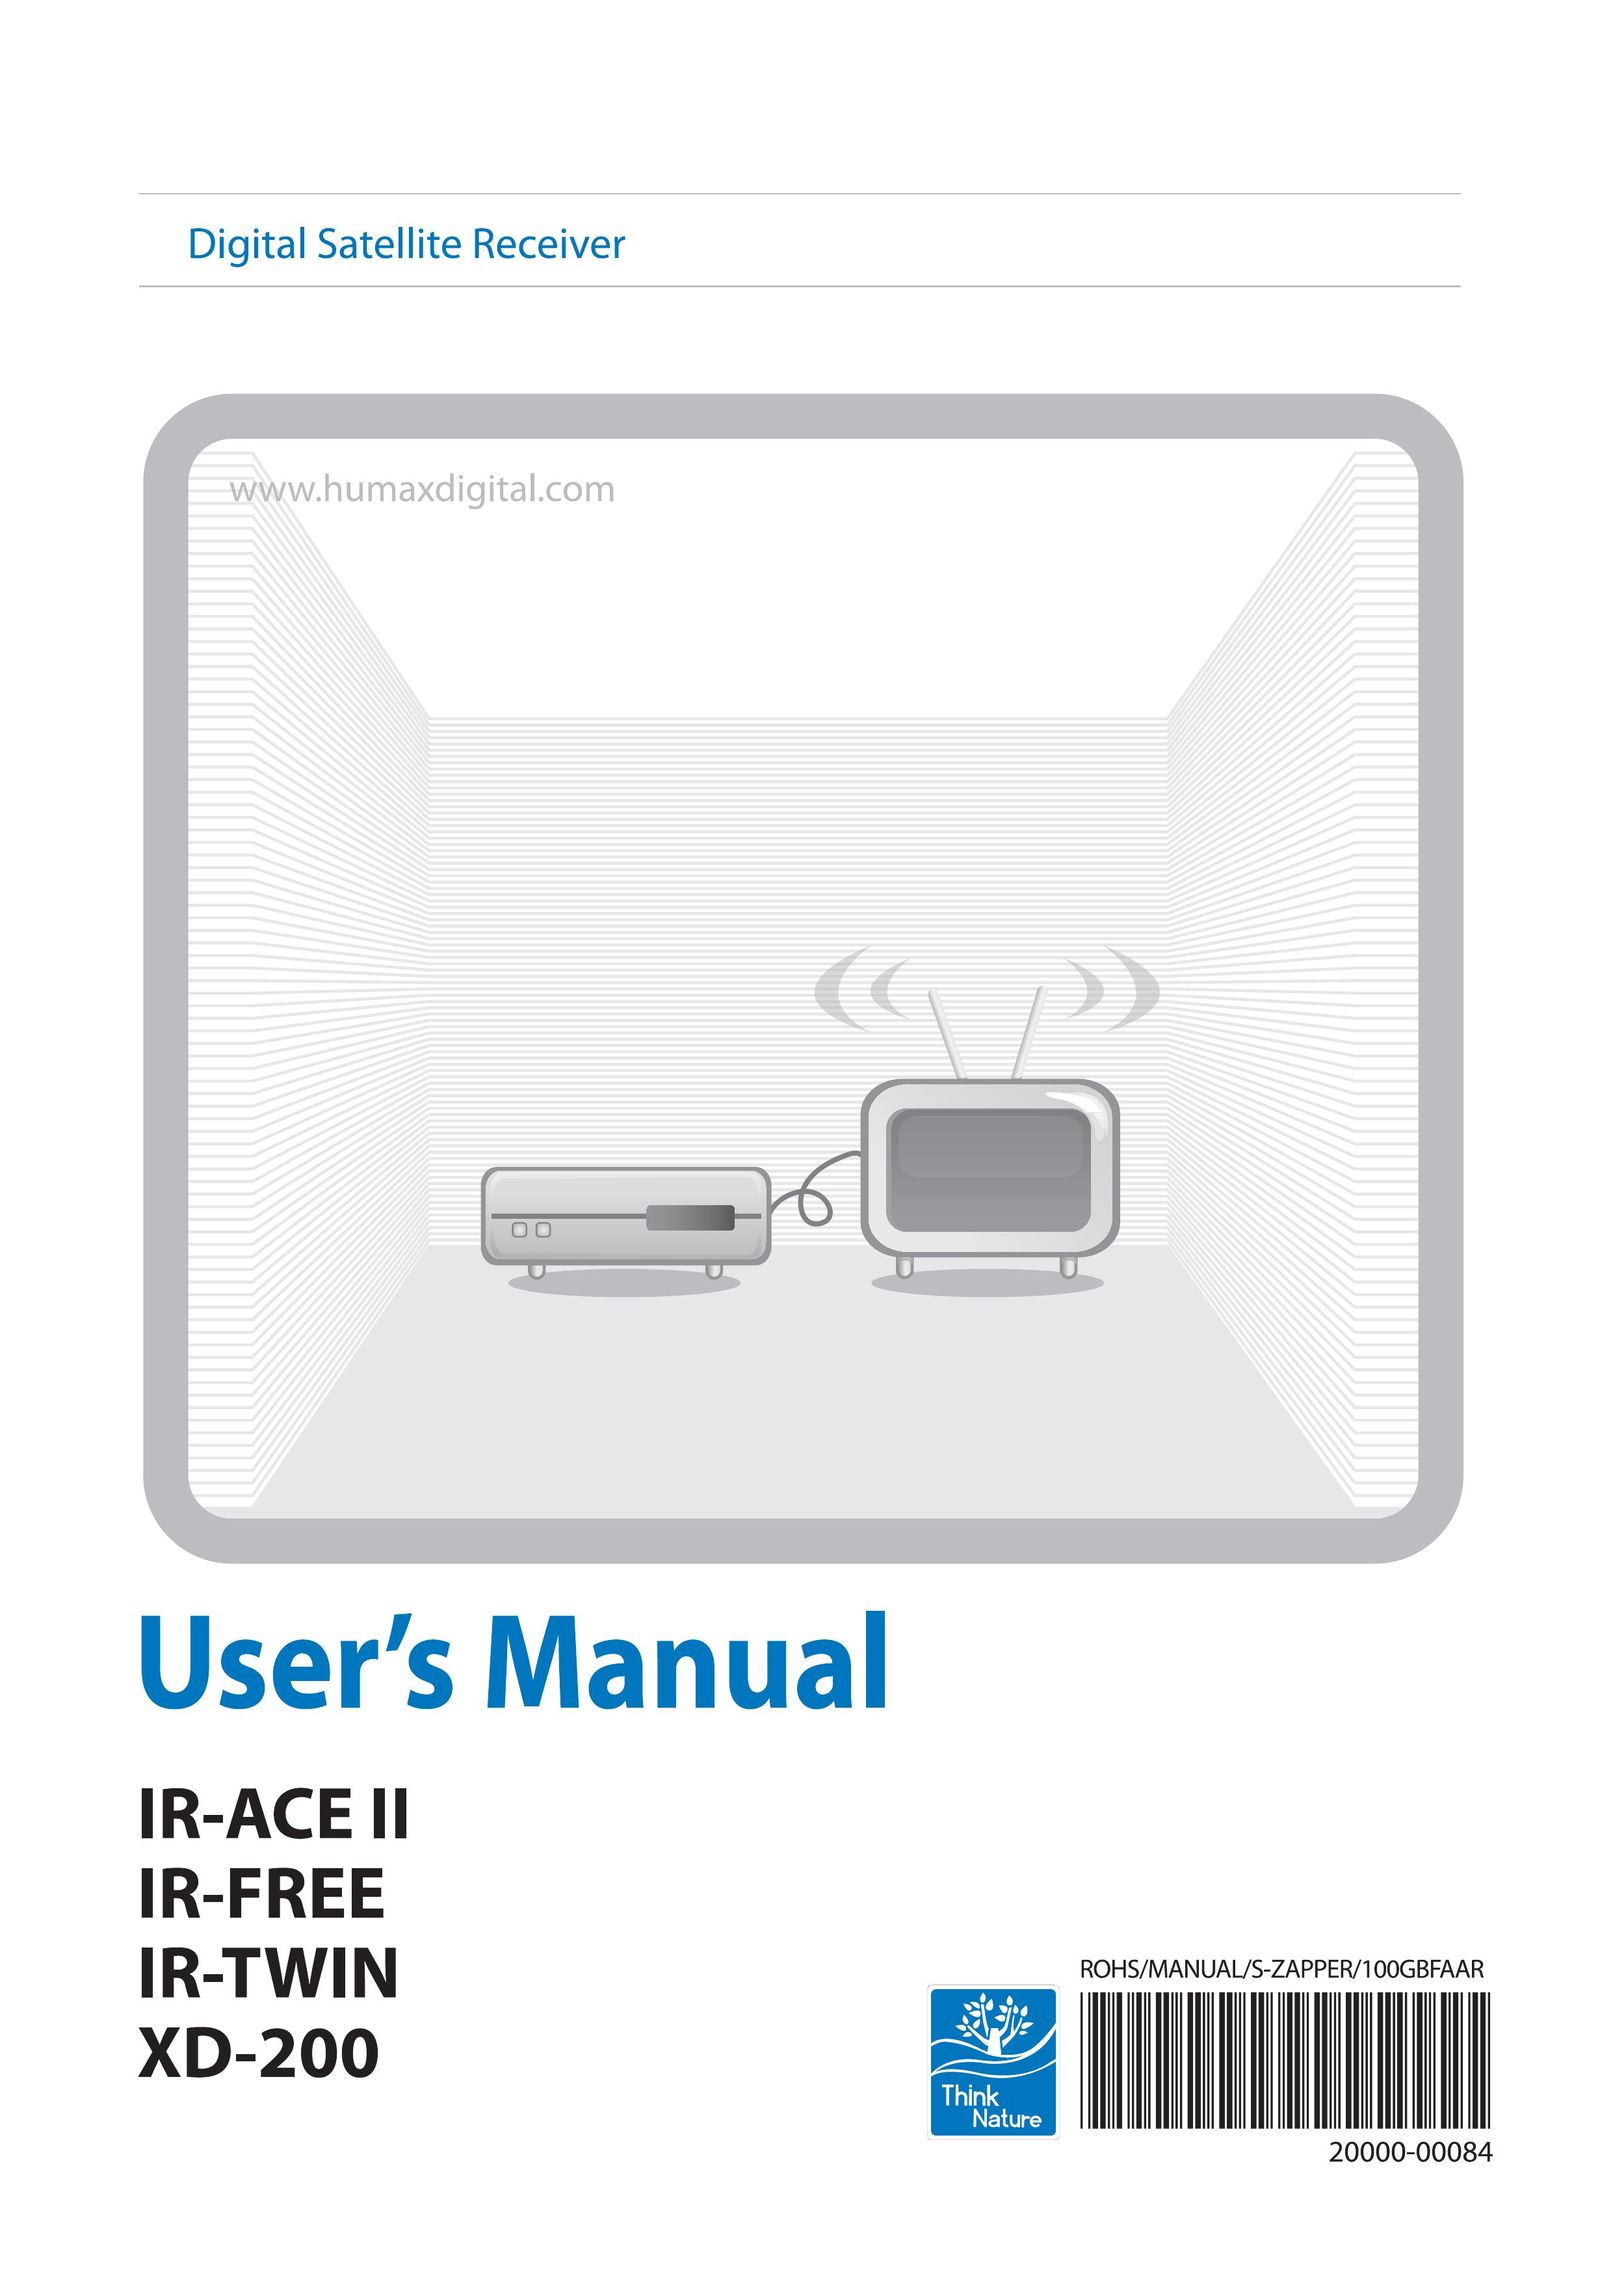 Humax IR-TWIN Satellite TV System User Manual